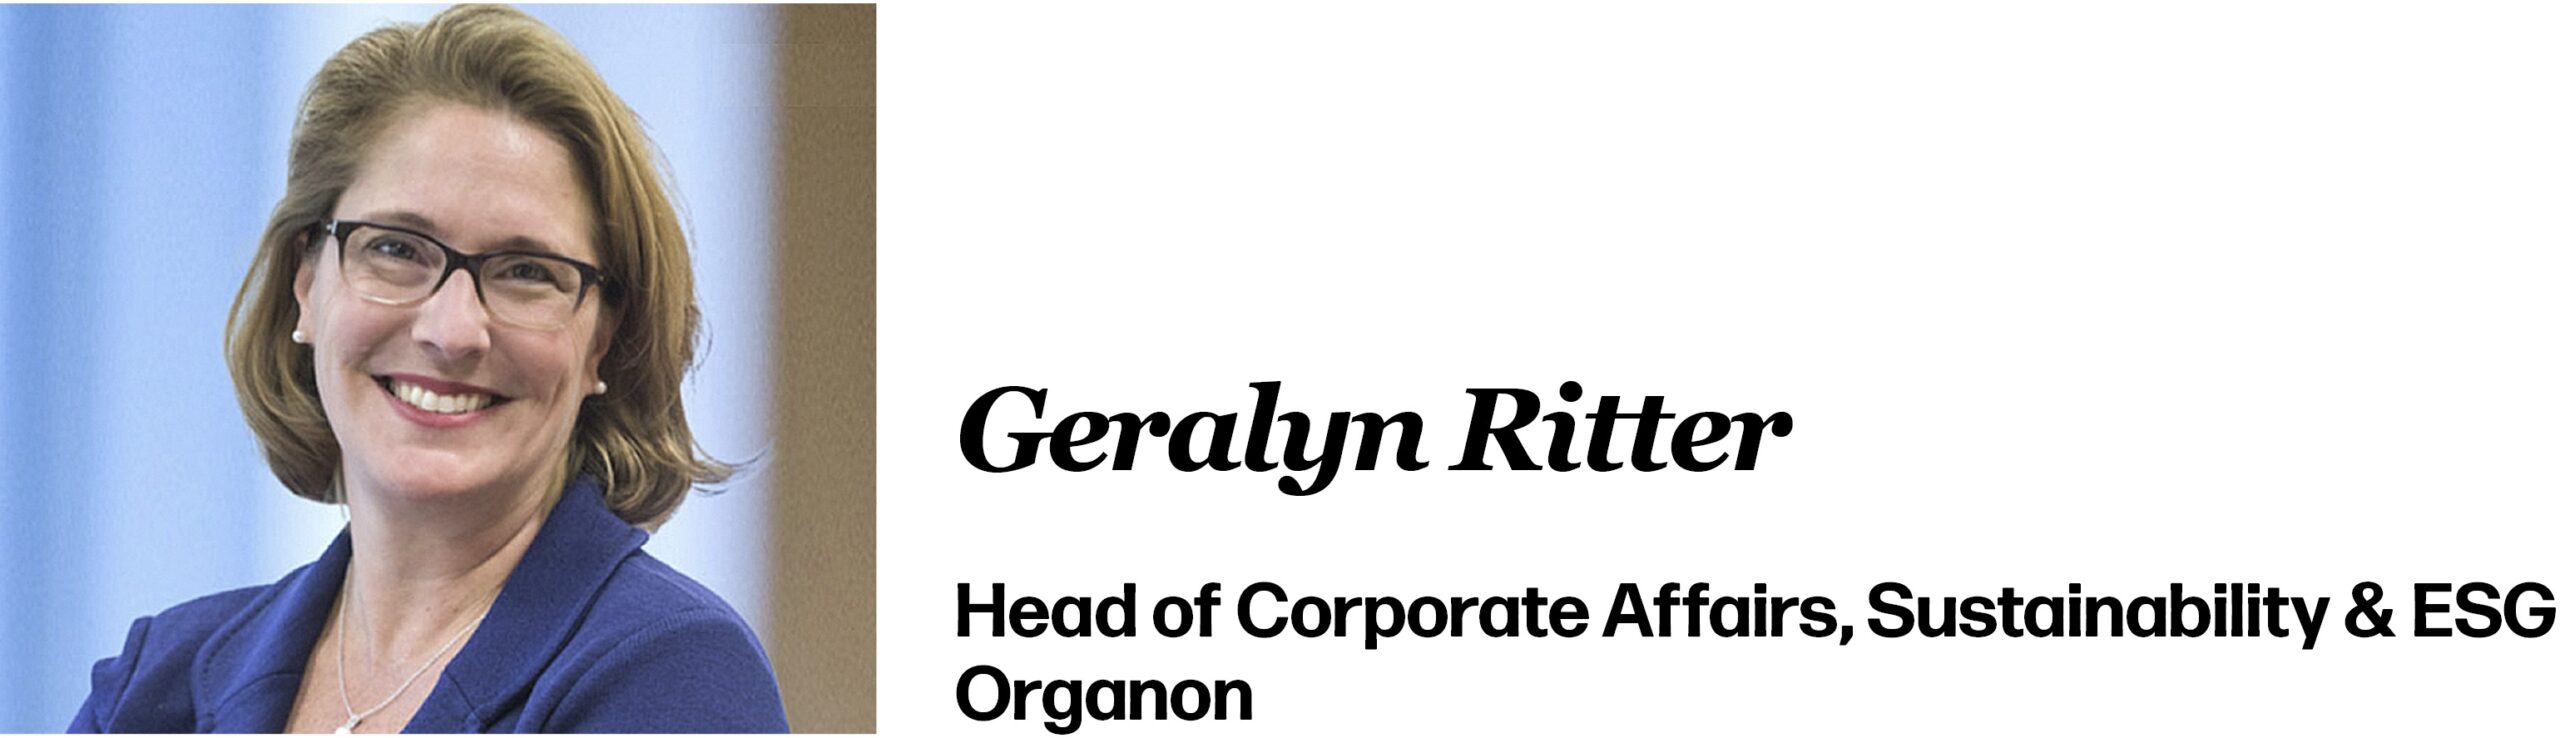 Geralyn Ritter Head of Corporate Affairs, Sustainability & ESG Organon